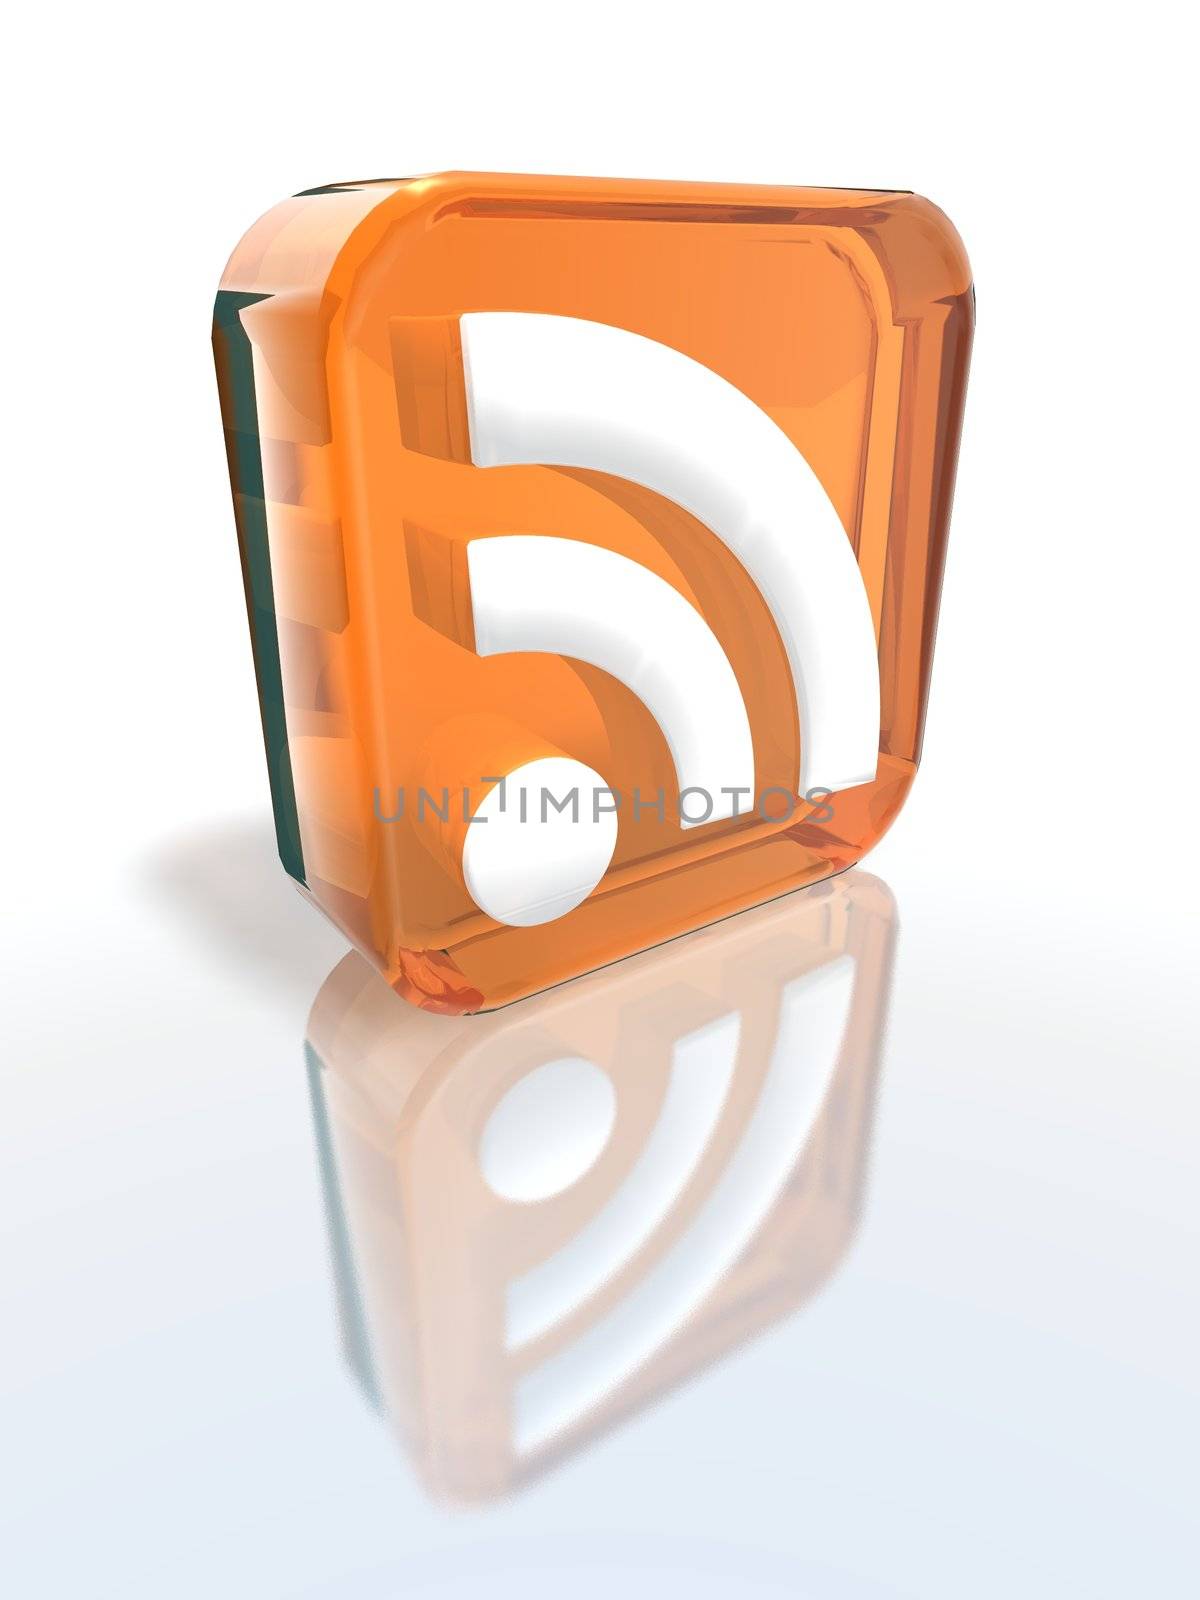 orange RSS sign by jbouzou